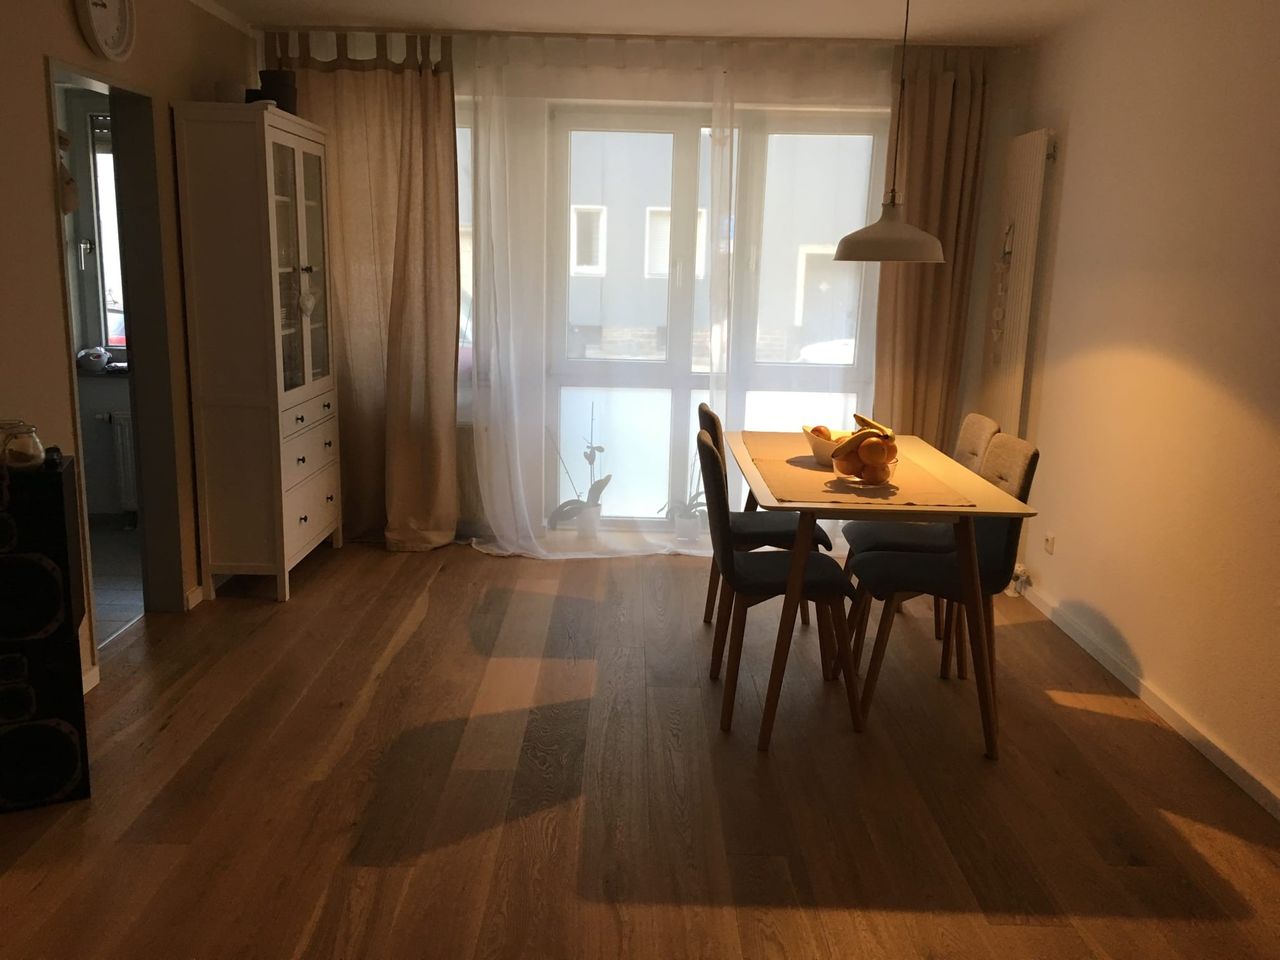 New apartment in good area düsseldorf-oberkassel , fully new furniture on request